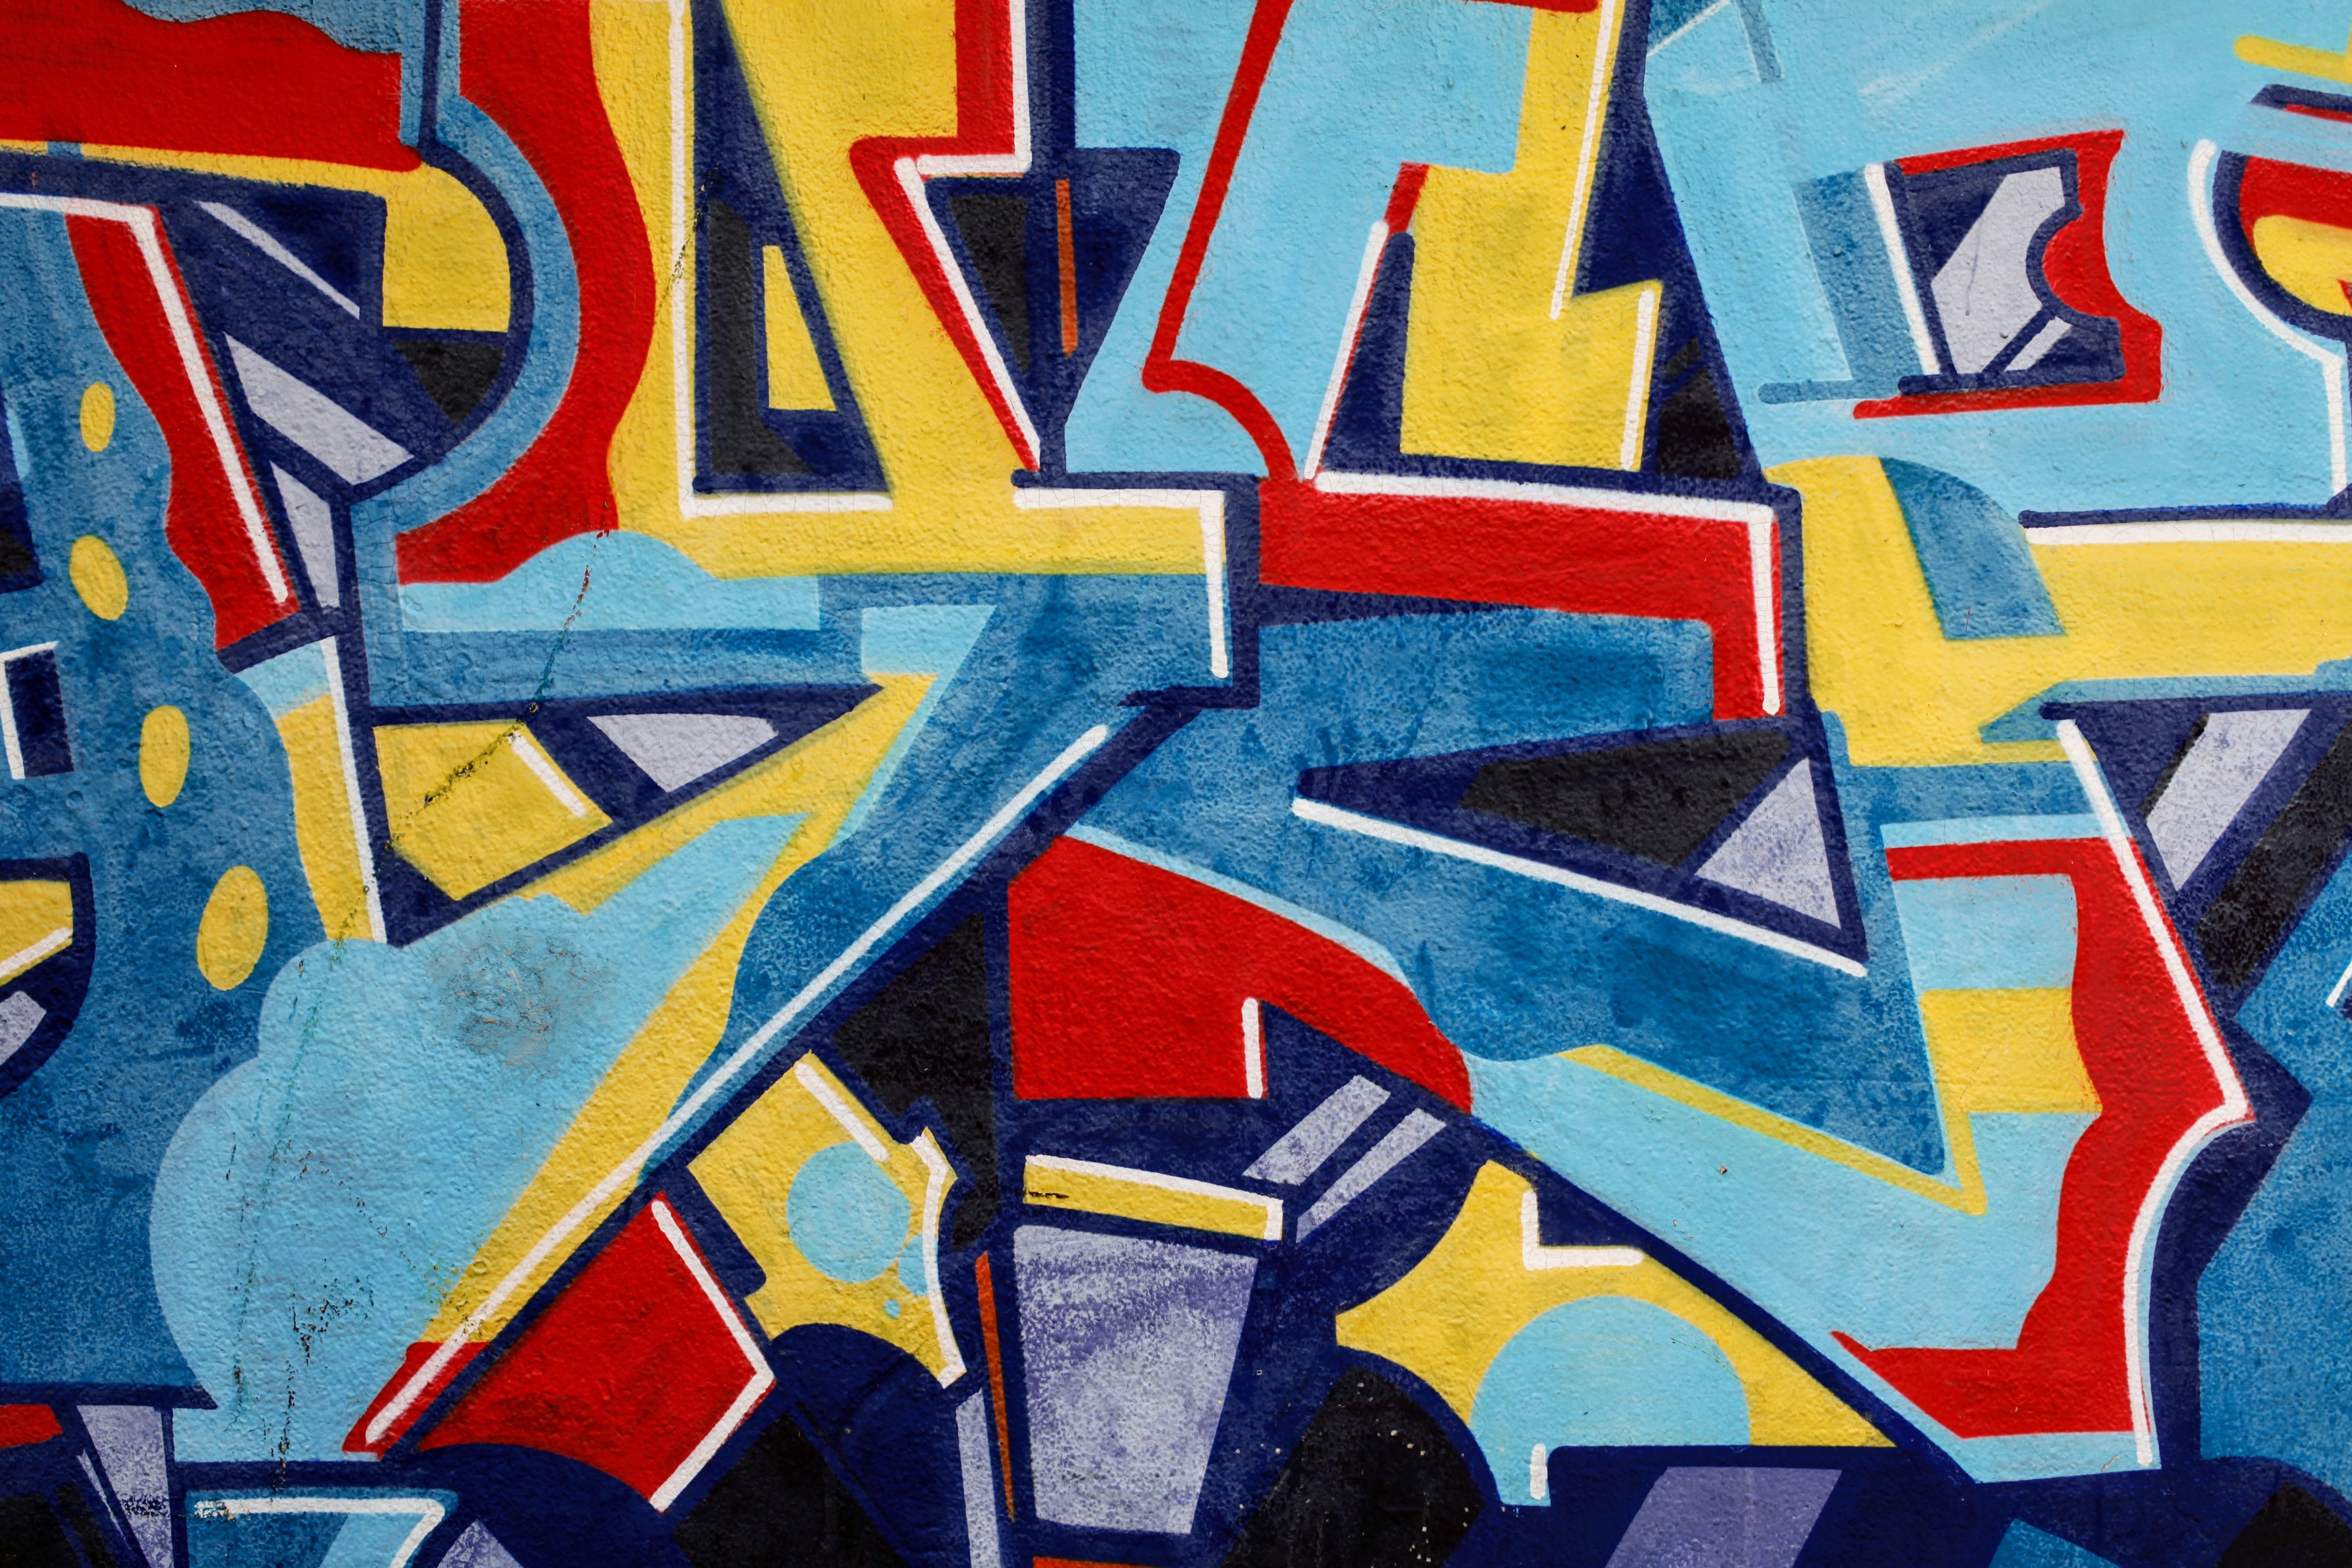 graffiti, letters, symbols, characters, miscellanea, miscellaneous, paint, wall